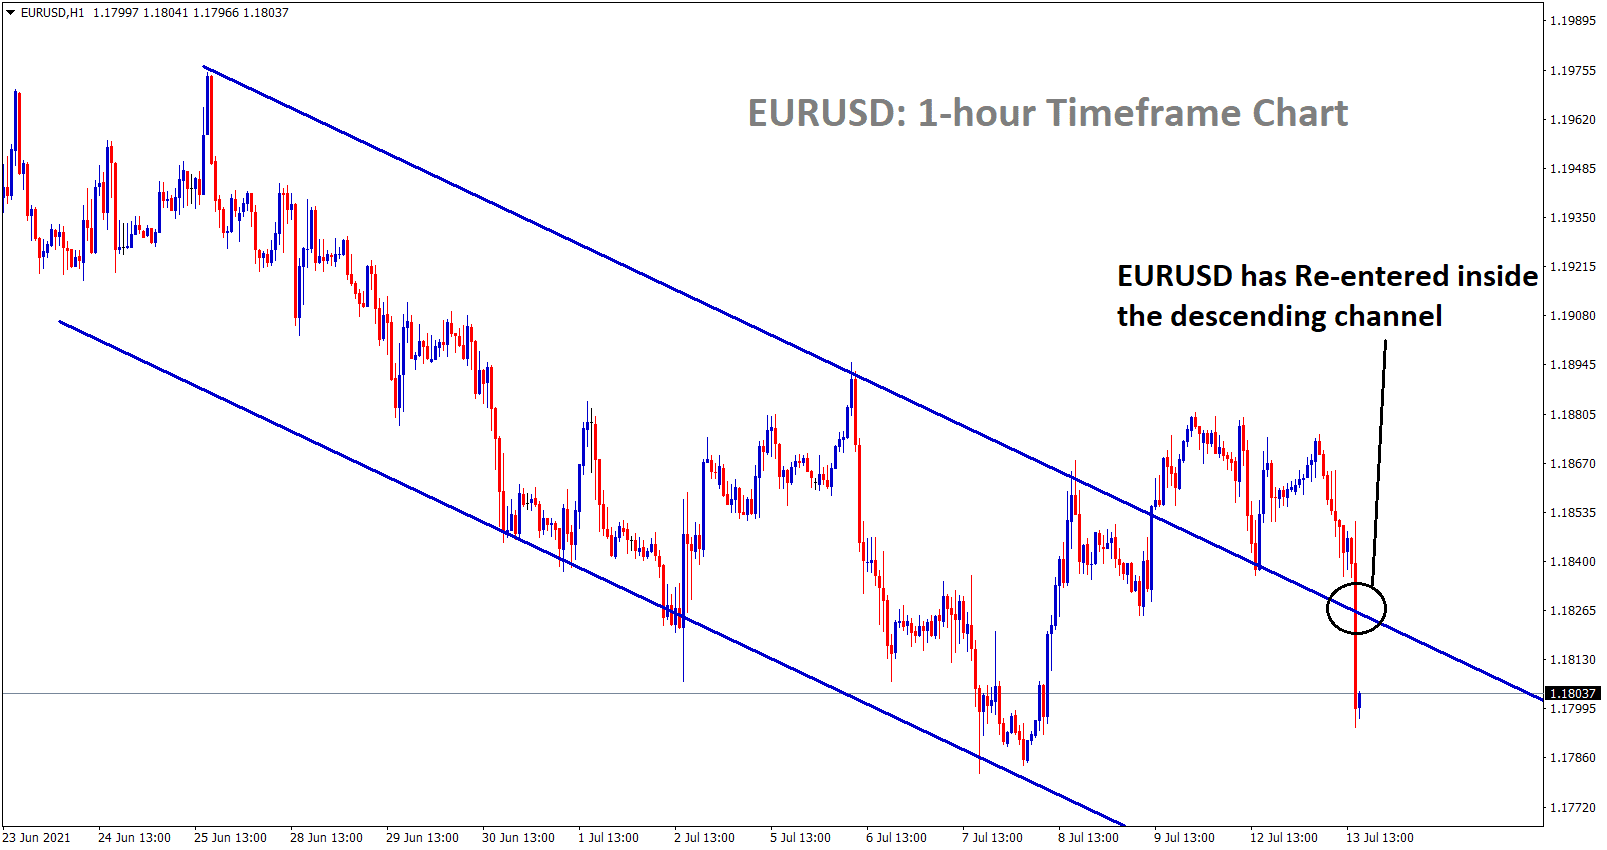 Eurusd market price reenter into the descending channel